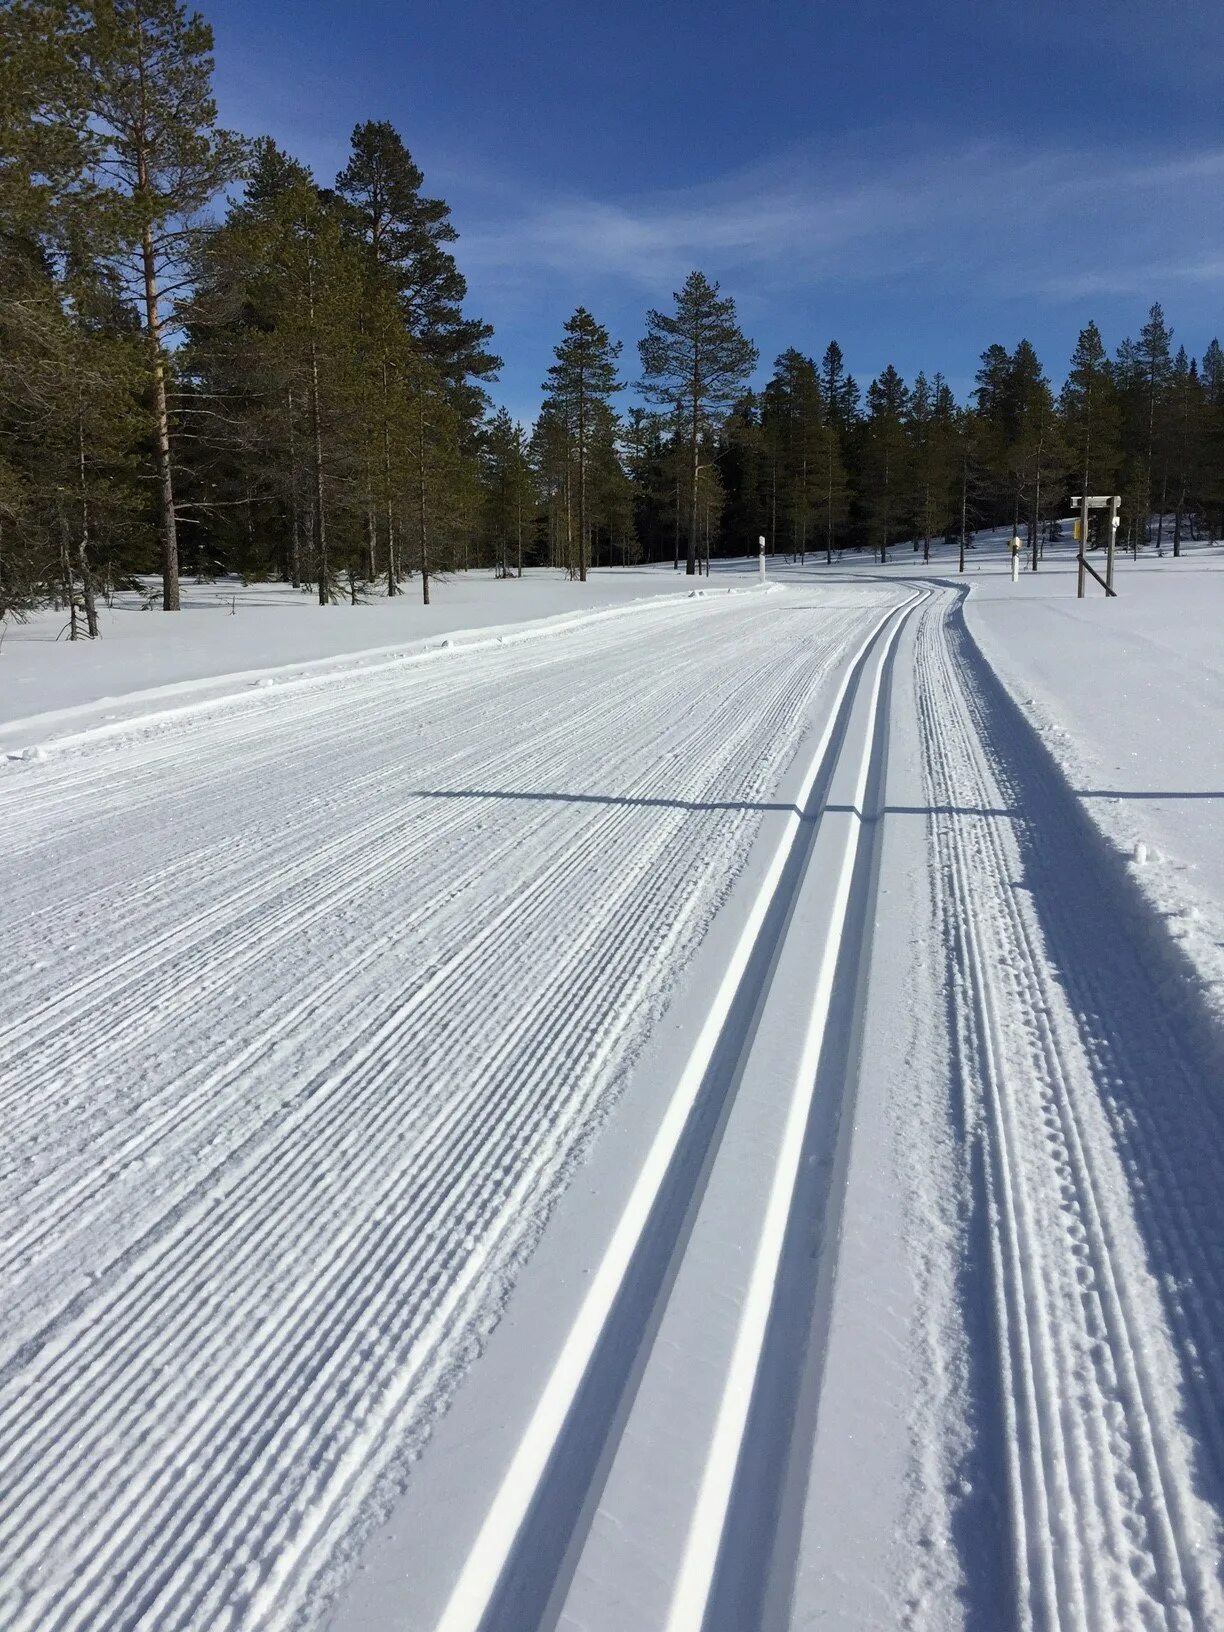 Виледь лыжная трасса. Лыжная дорожка. Трасса для беговых лыж. Лыжи трасса.